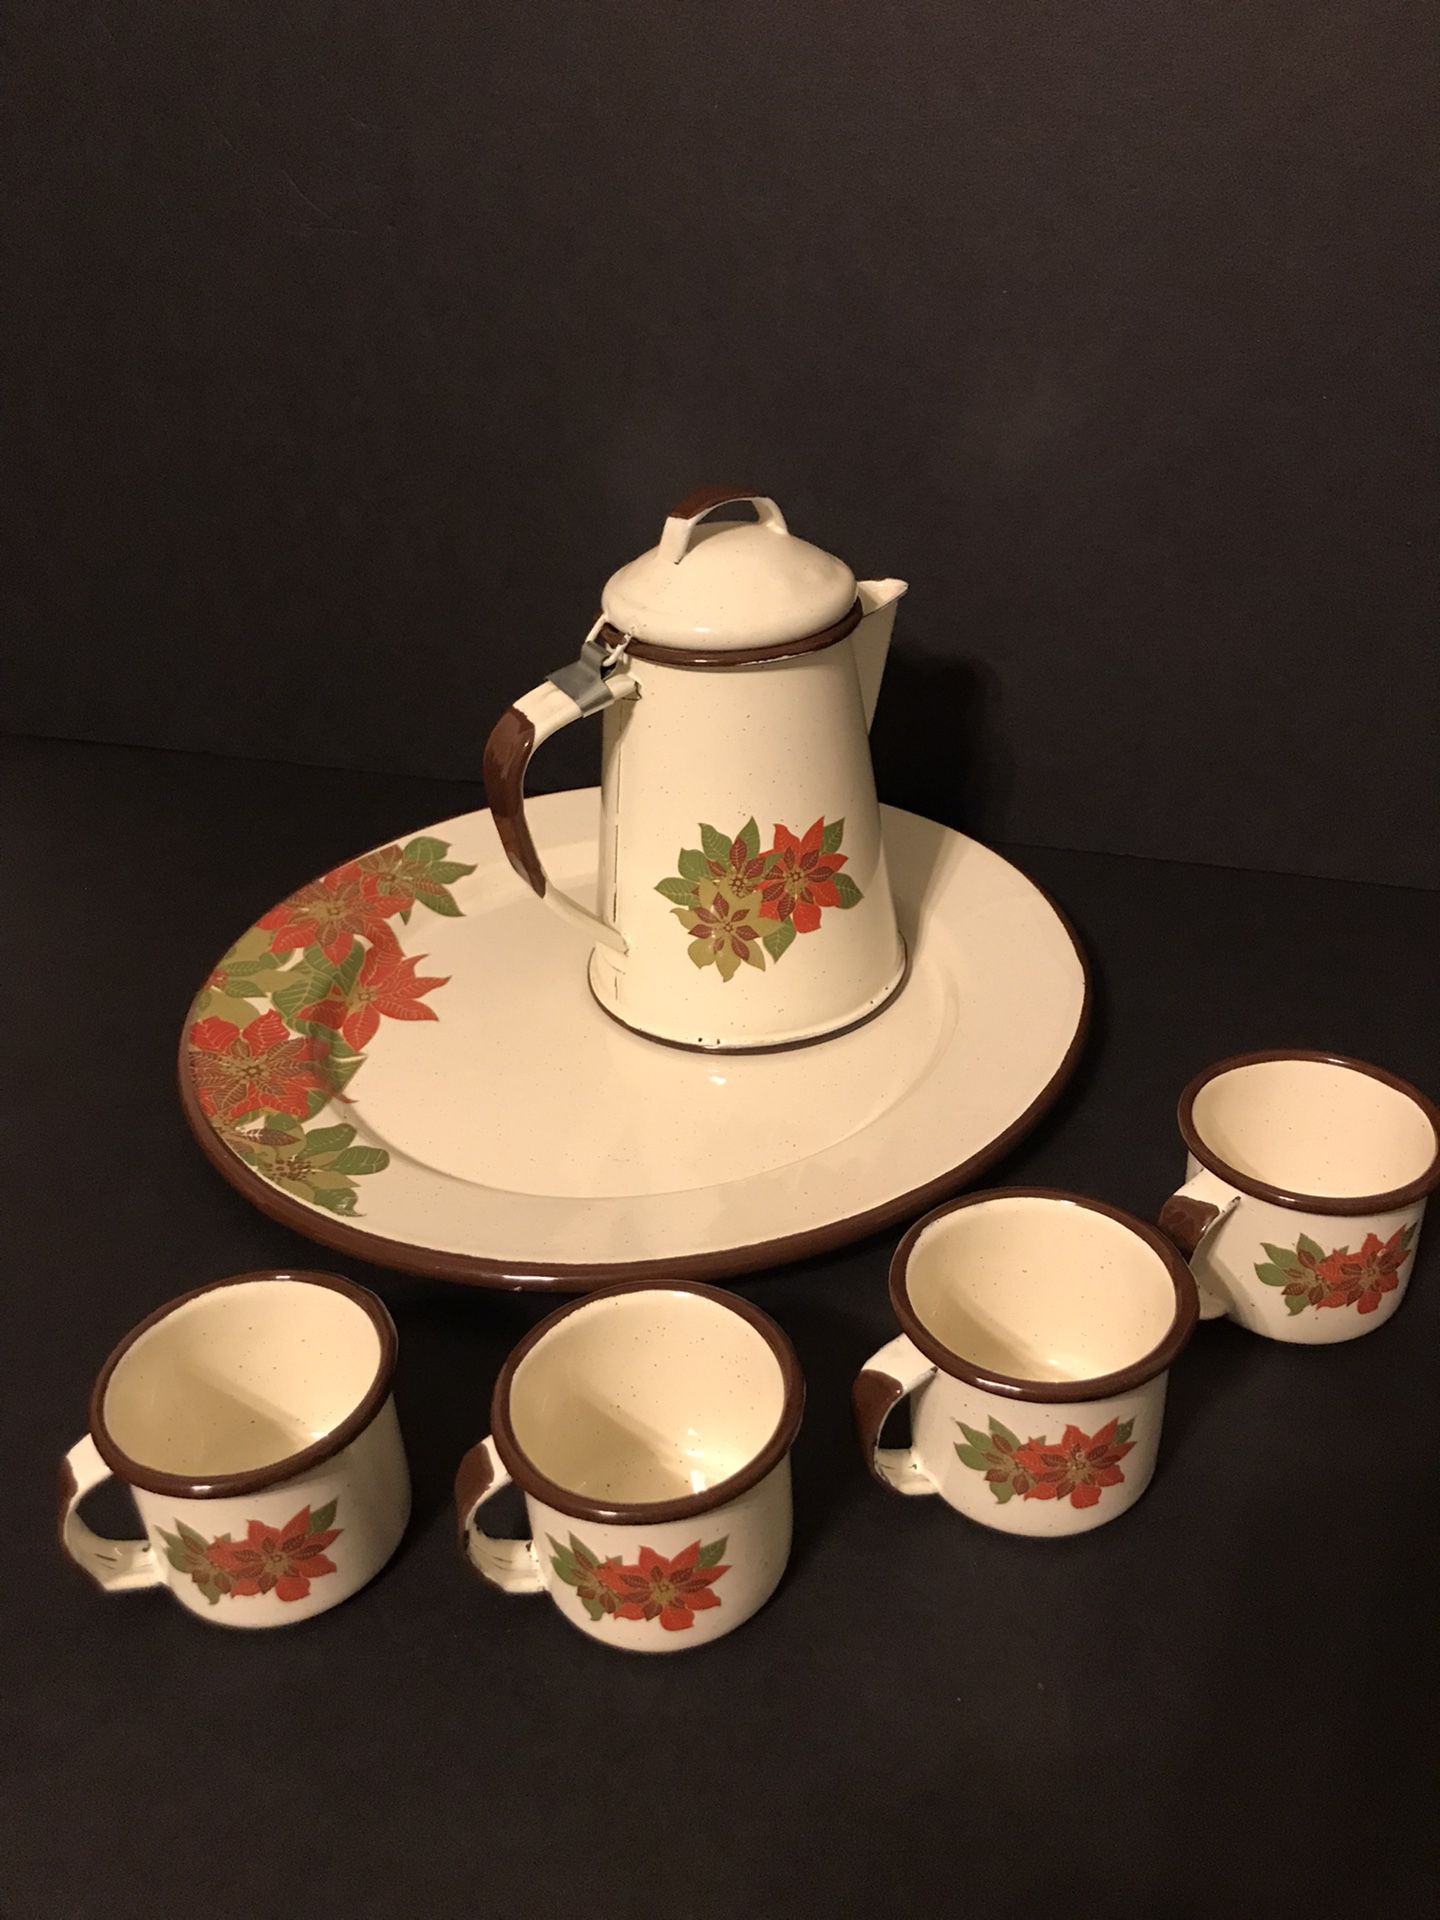 Vintage Poinsettia Metal Tea/Coffee Set w/ 4 Small Cups, Serving Plate & Tea Pot